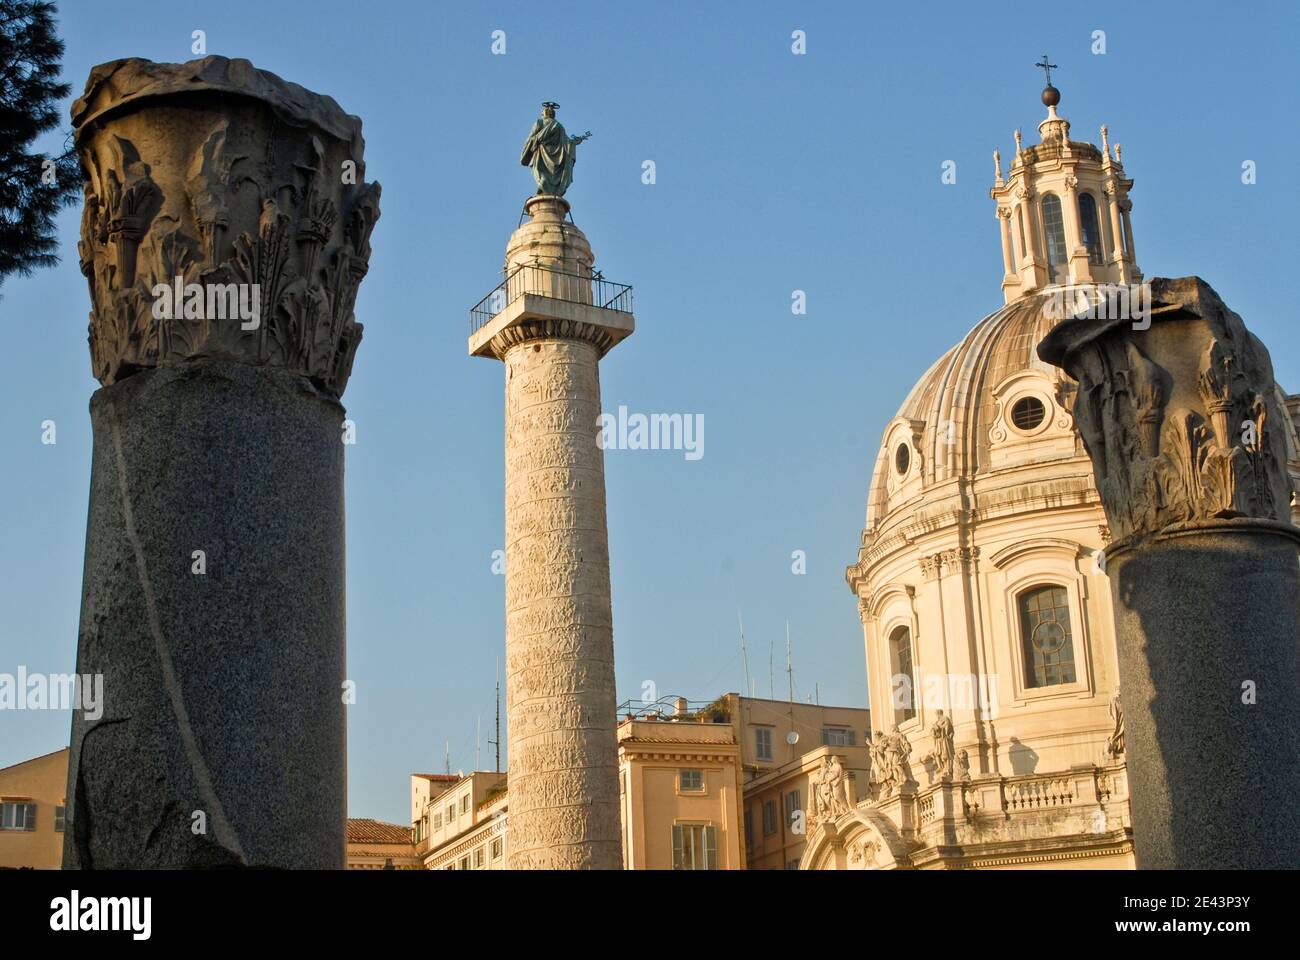 Trajan's Forum: Trajan's Column and Santissimo Nome di Maria al Foro Traiano church. Rome, Italy Stock Photo